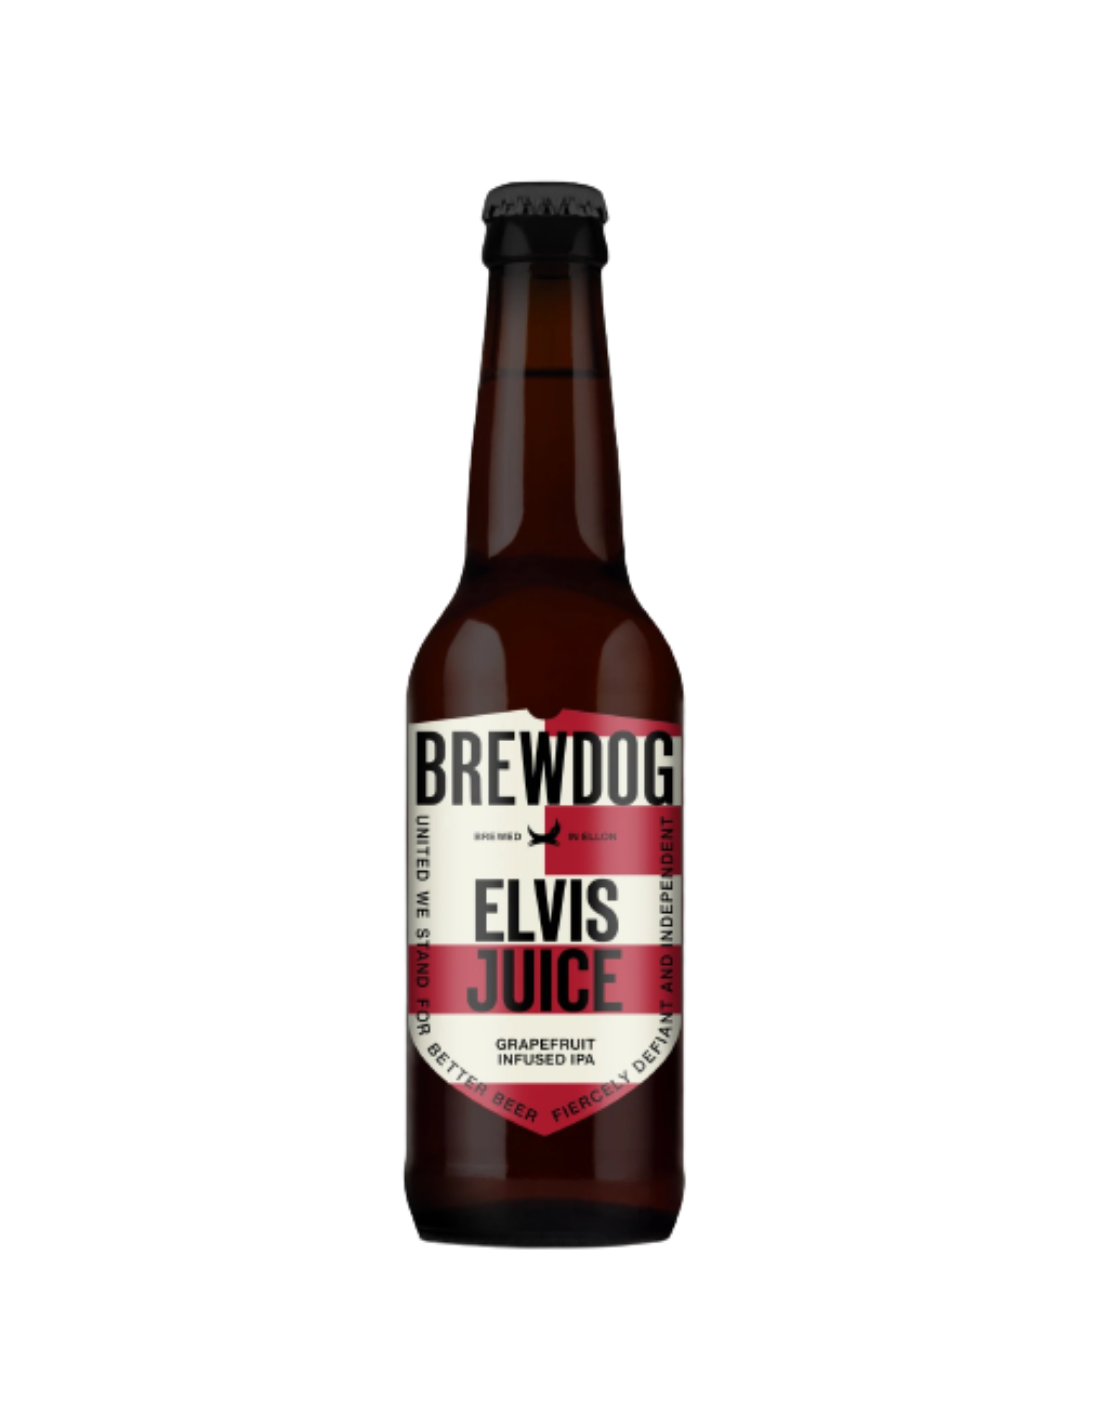 Bere blonda, artizanala BrewDog Elvis Juice IPA, 6.5% alc., 0.33L, Scotia alcooldiscount.ro